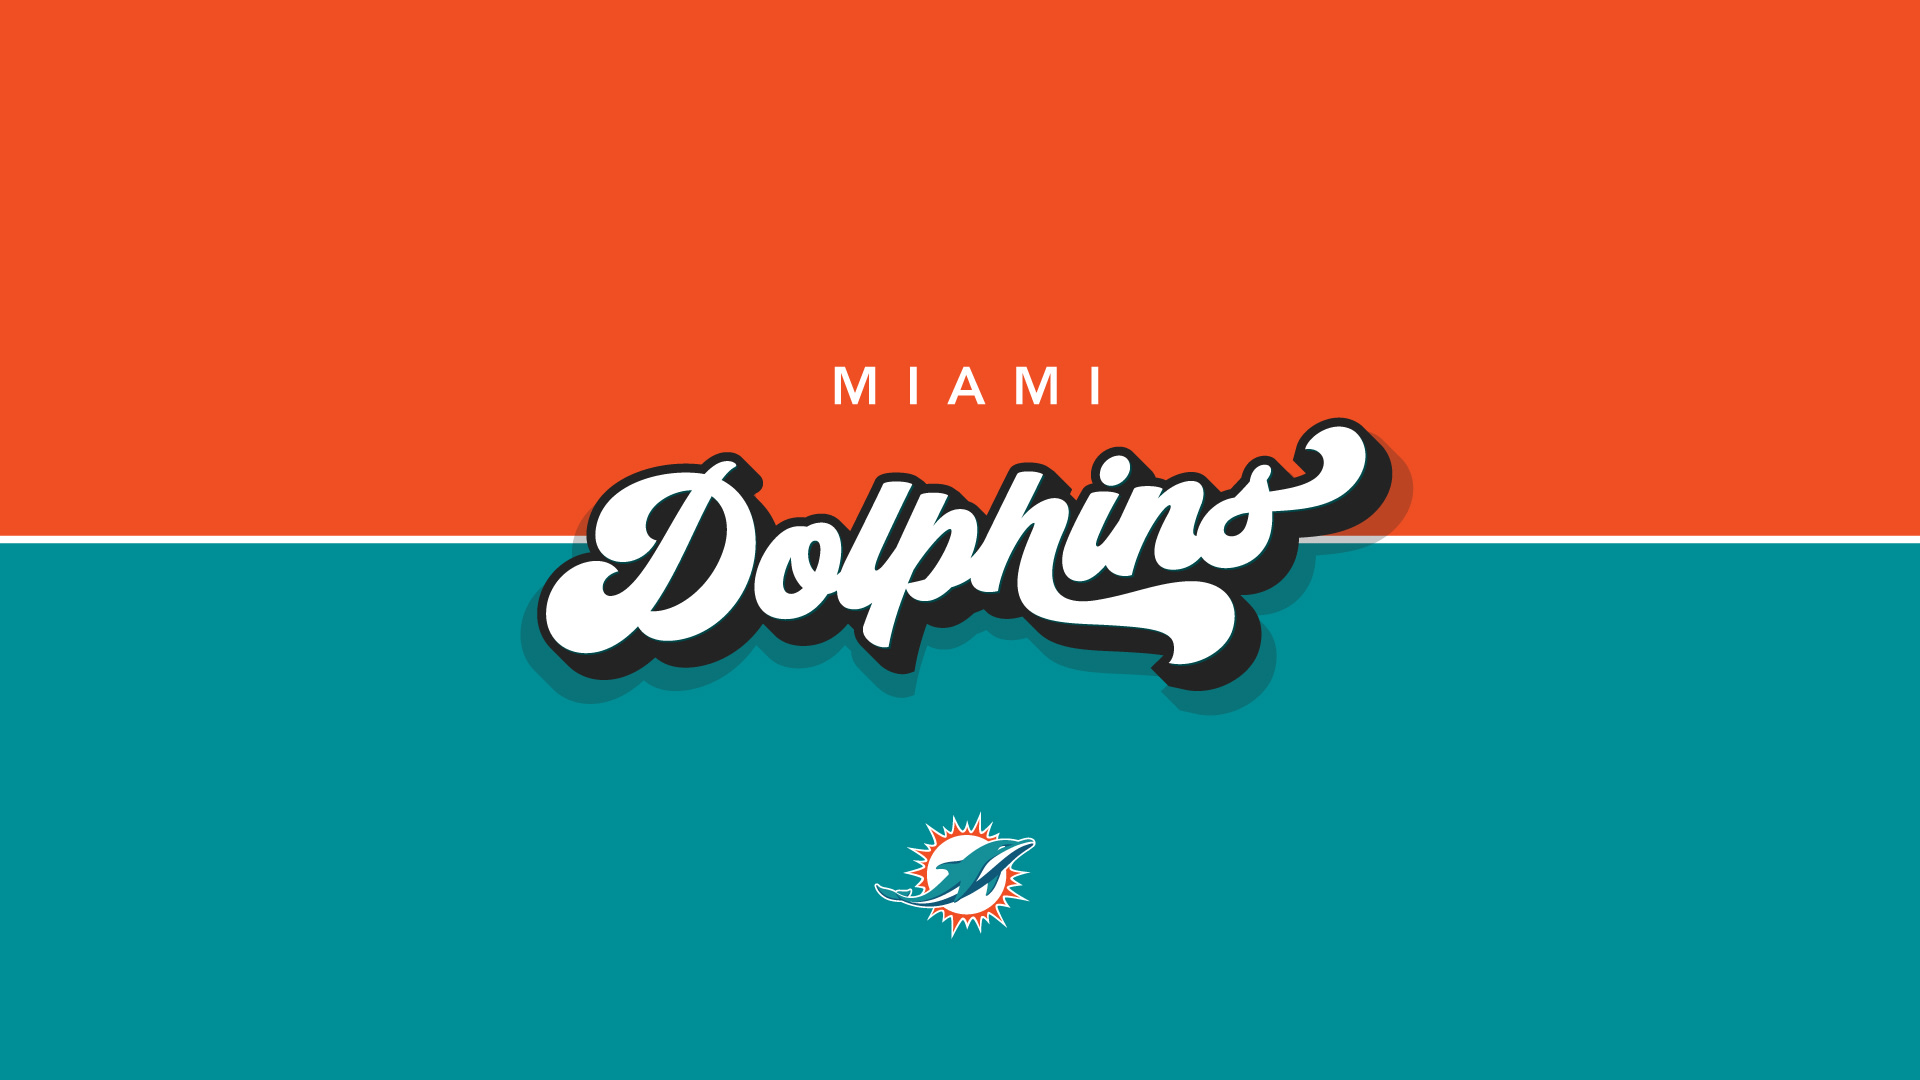 Dolphins Wallpaper Miami